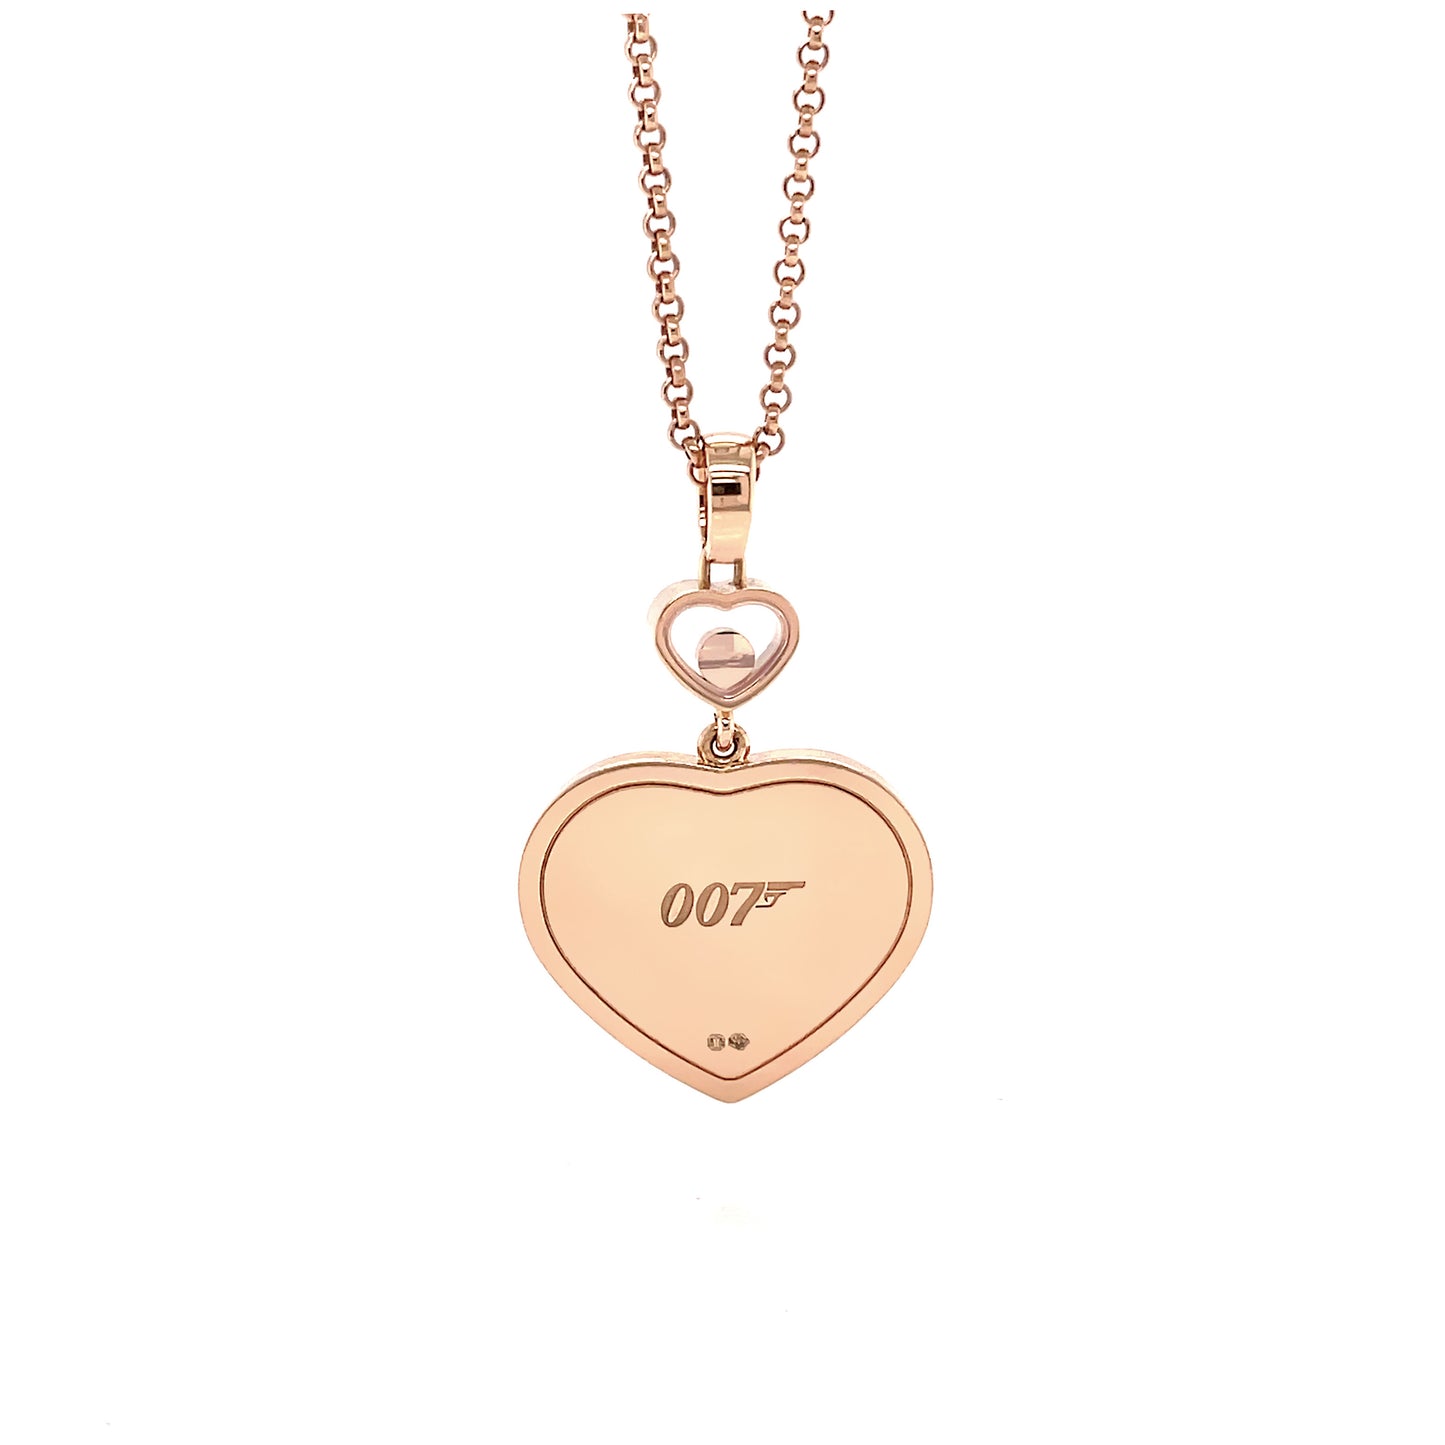 Chopard 18ct Gold Happy Hearts James Bond 007 Limited Edition Diamond Pendant